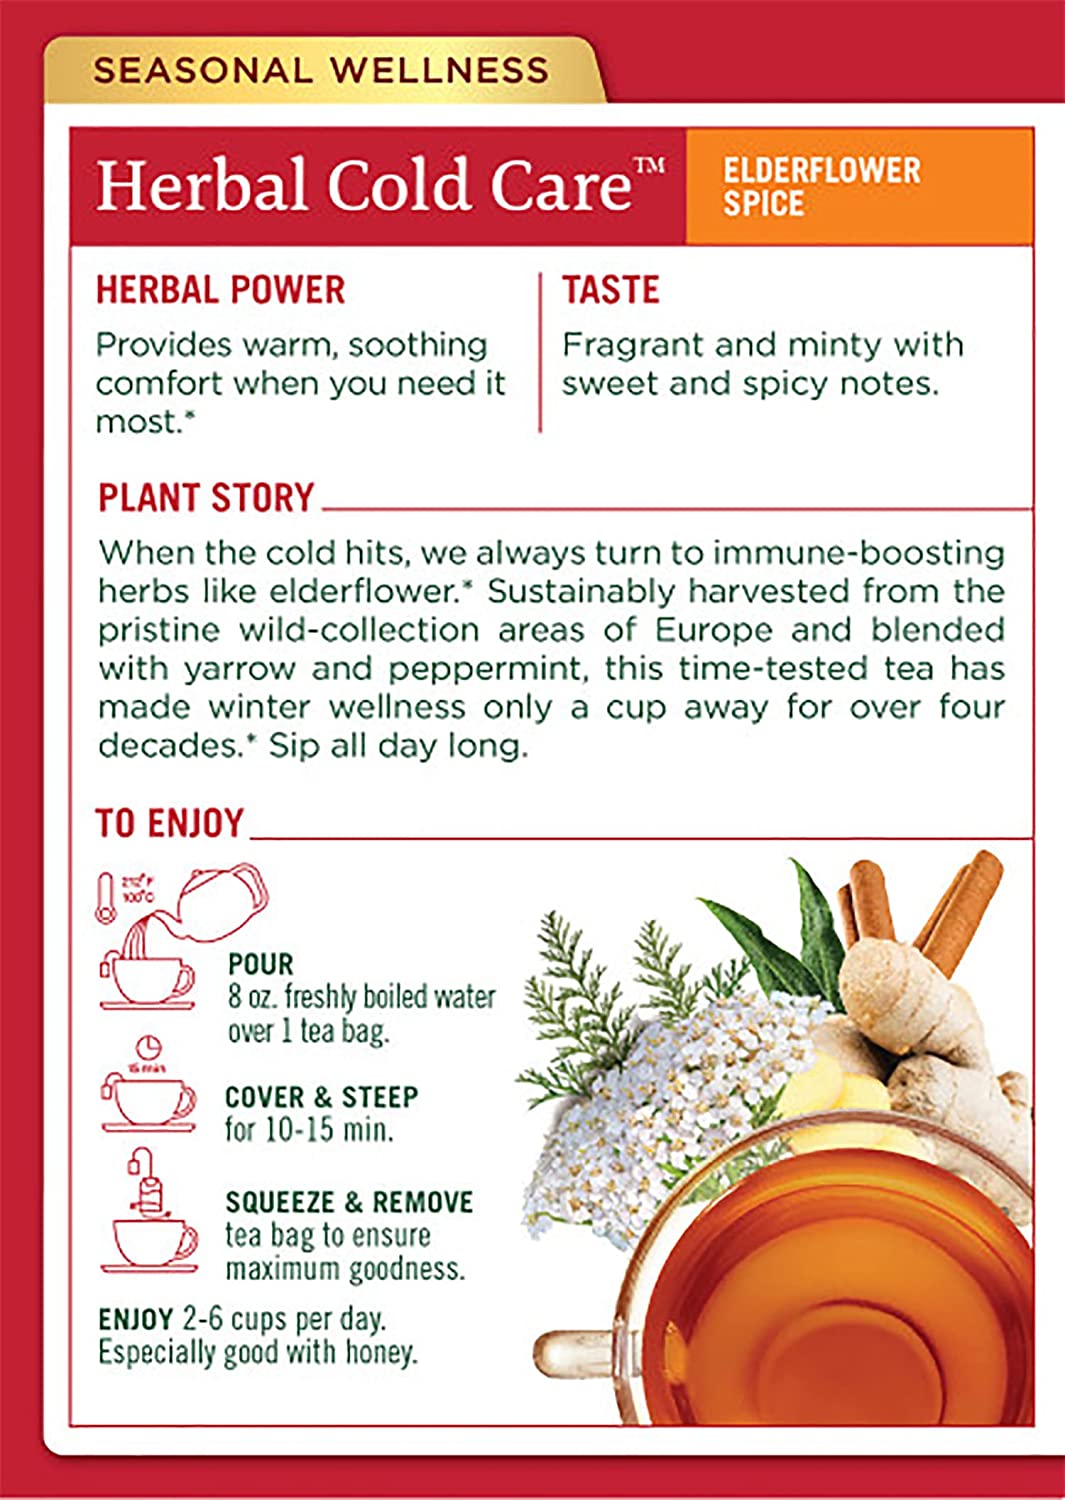 Traditional Medicinals, Organic Herbal Cold Care Elderflower Spice Herbal Tea, Warm & Comforting Seasonal Wellness, (Pack of 2) - 32 Tea Bags Total